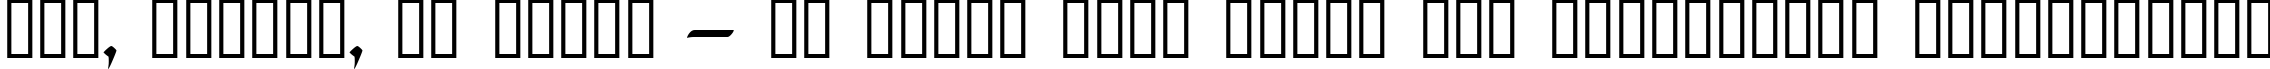 Пример написания шрифтом Paganini SemiBold текста на украинском